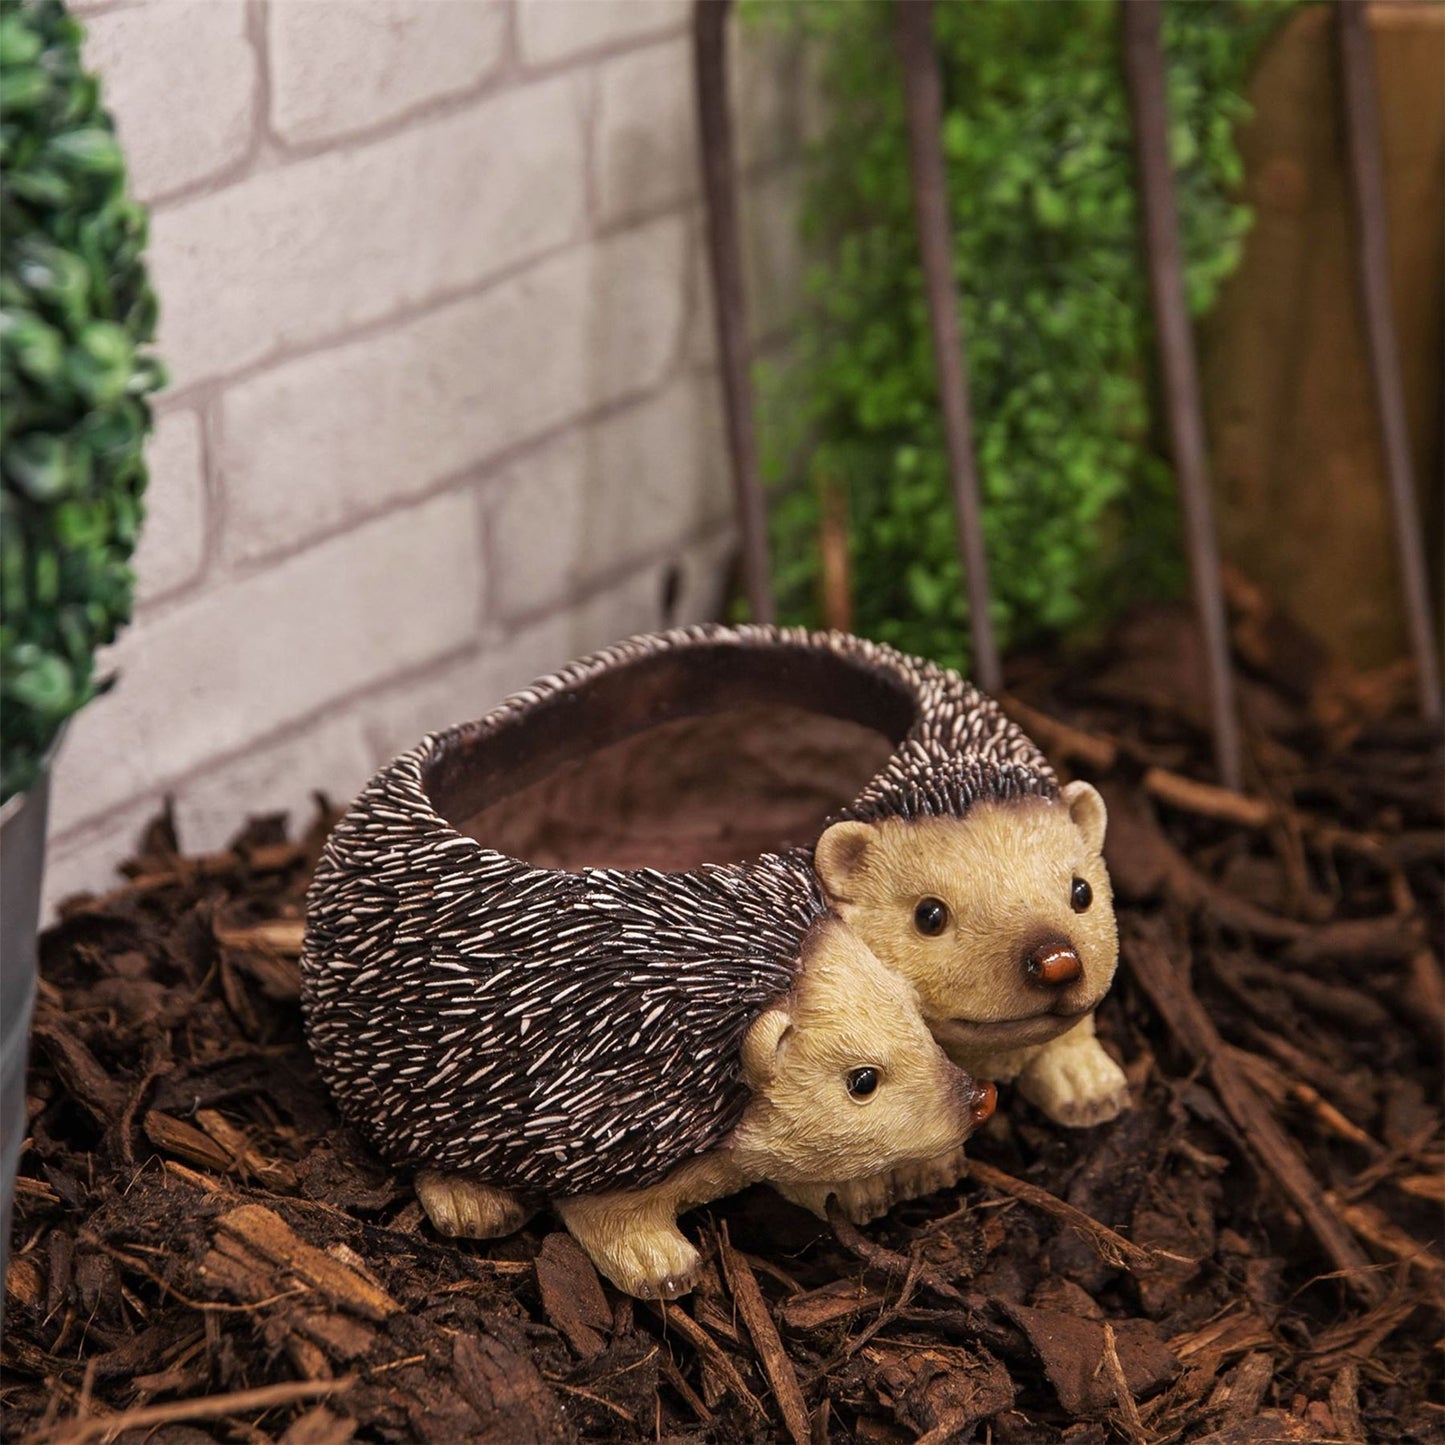 Naturecraft Collection - Two Hedgehog Planter